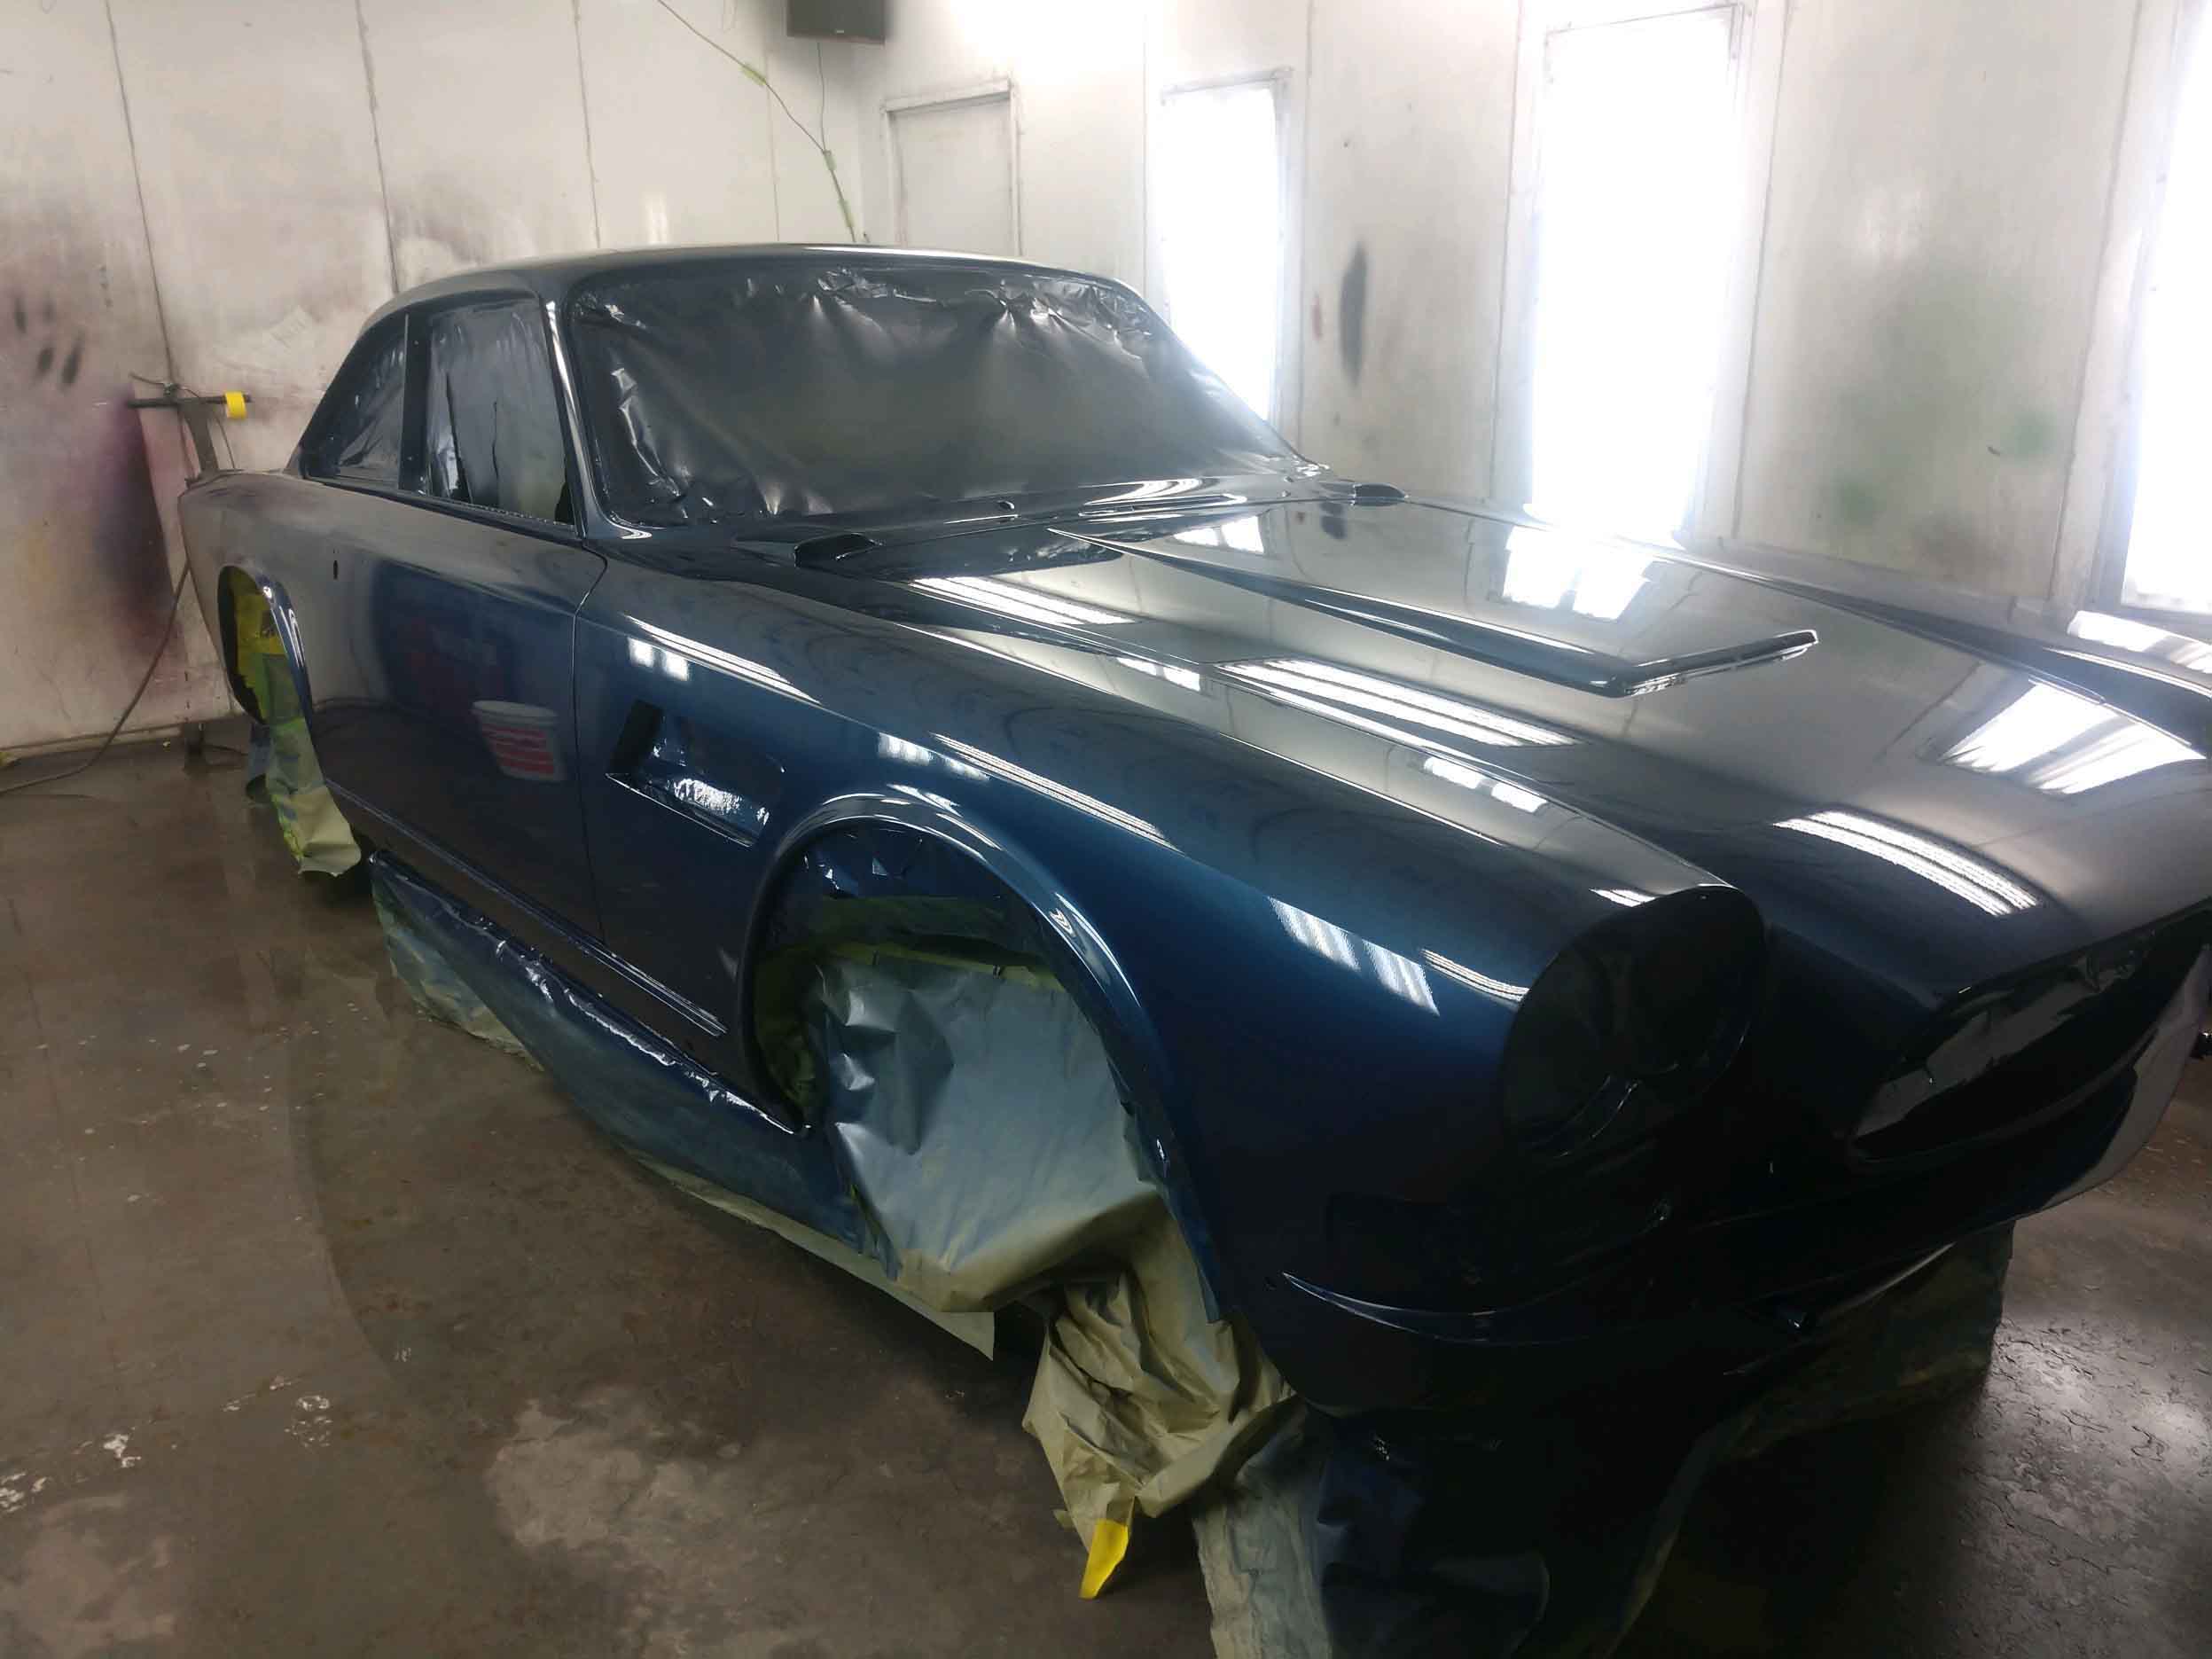 1967 Maserati Sebring II fresh paint job